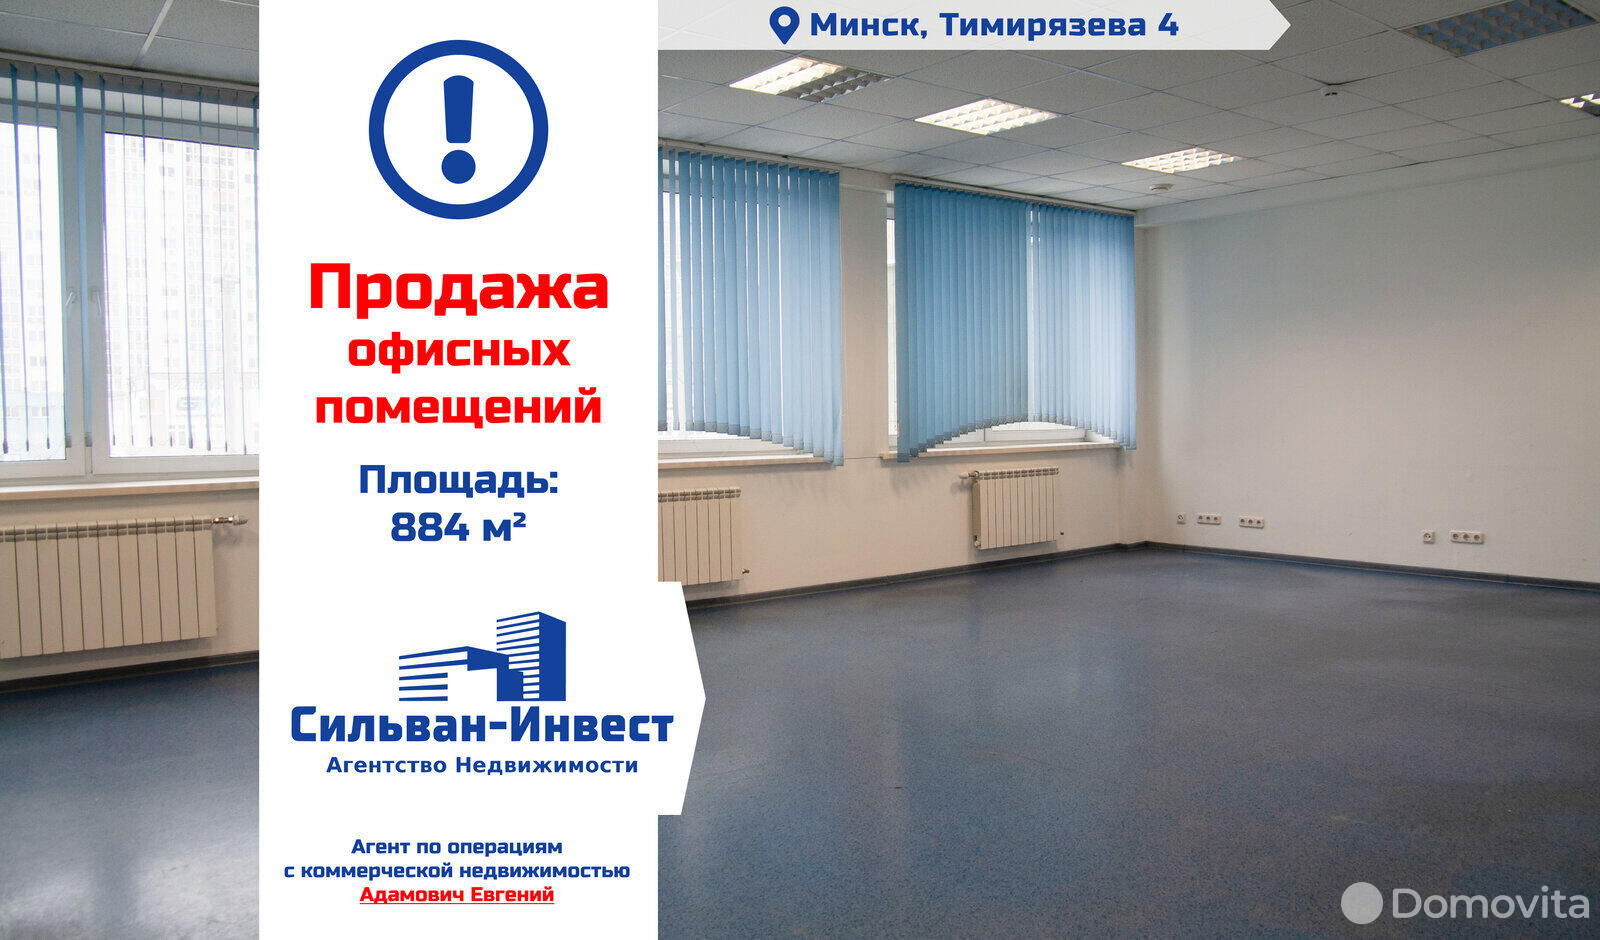 Стоимость продажи офиса, Минск, ул. Тимирязева, д. 4